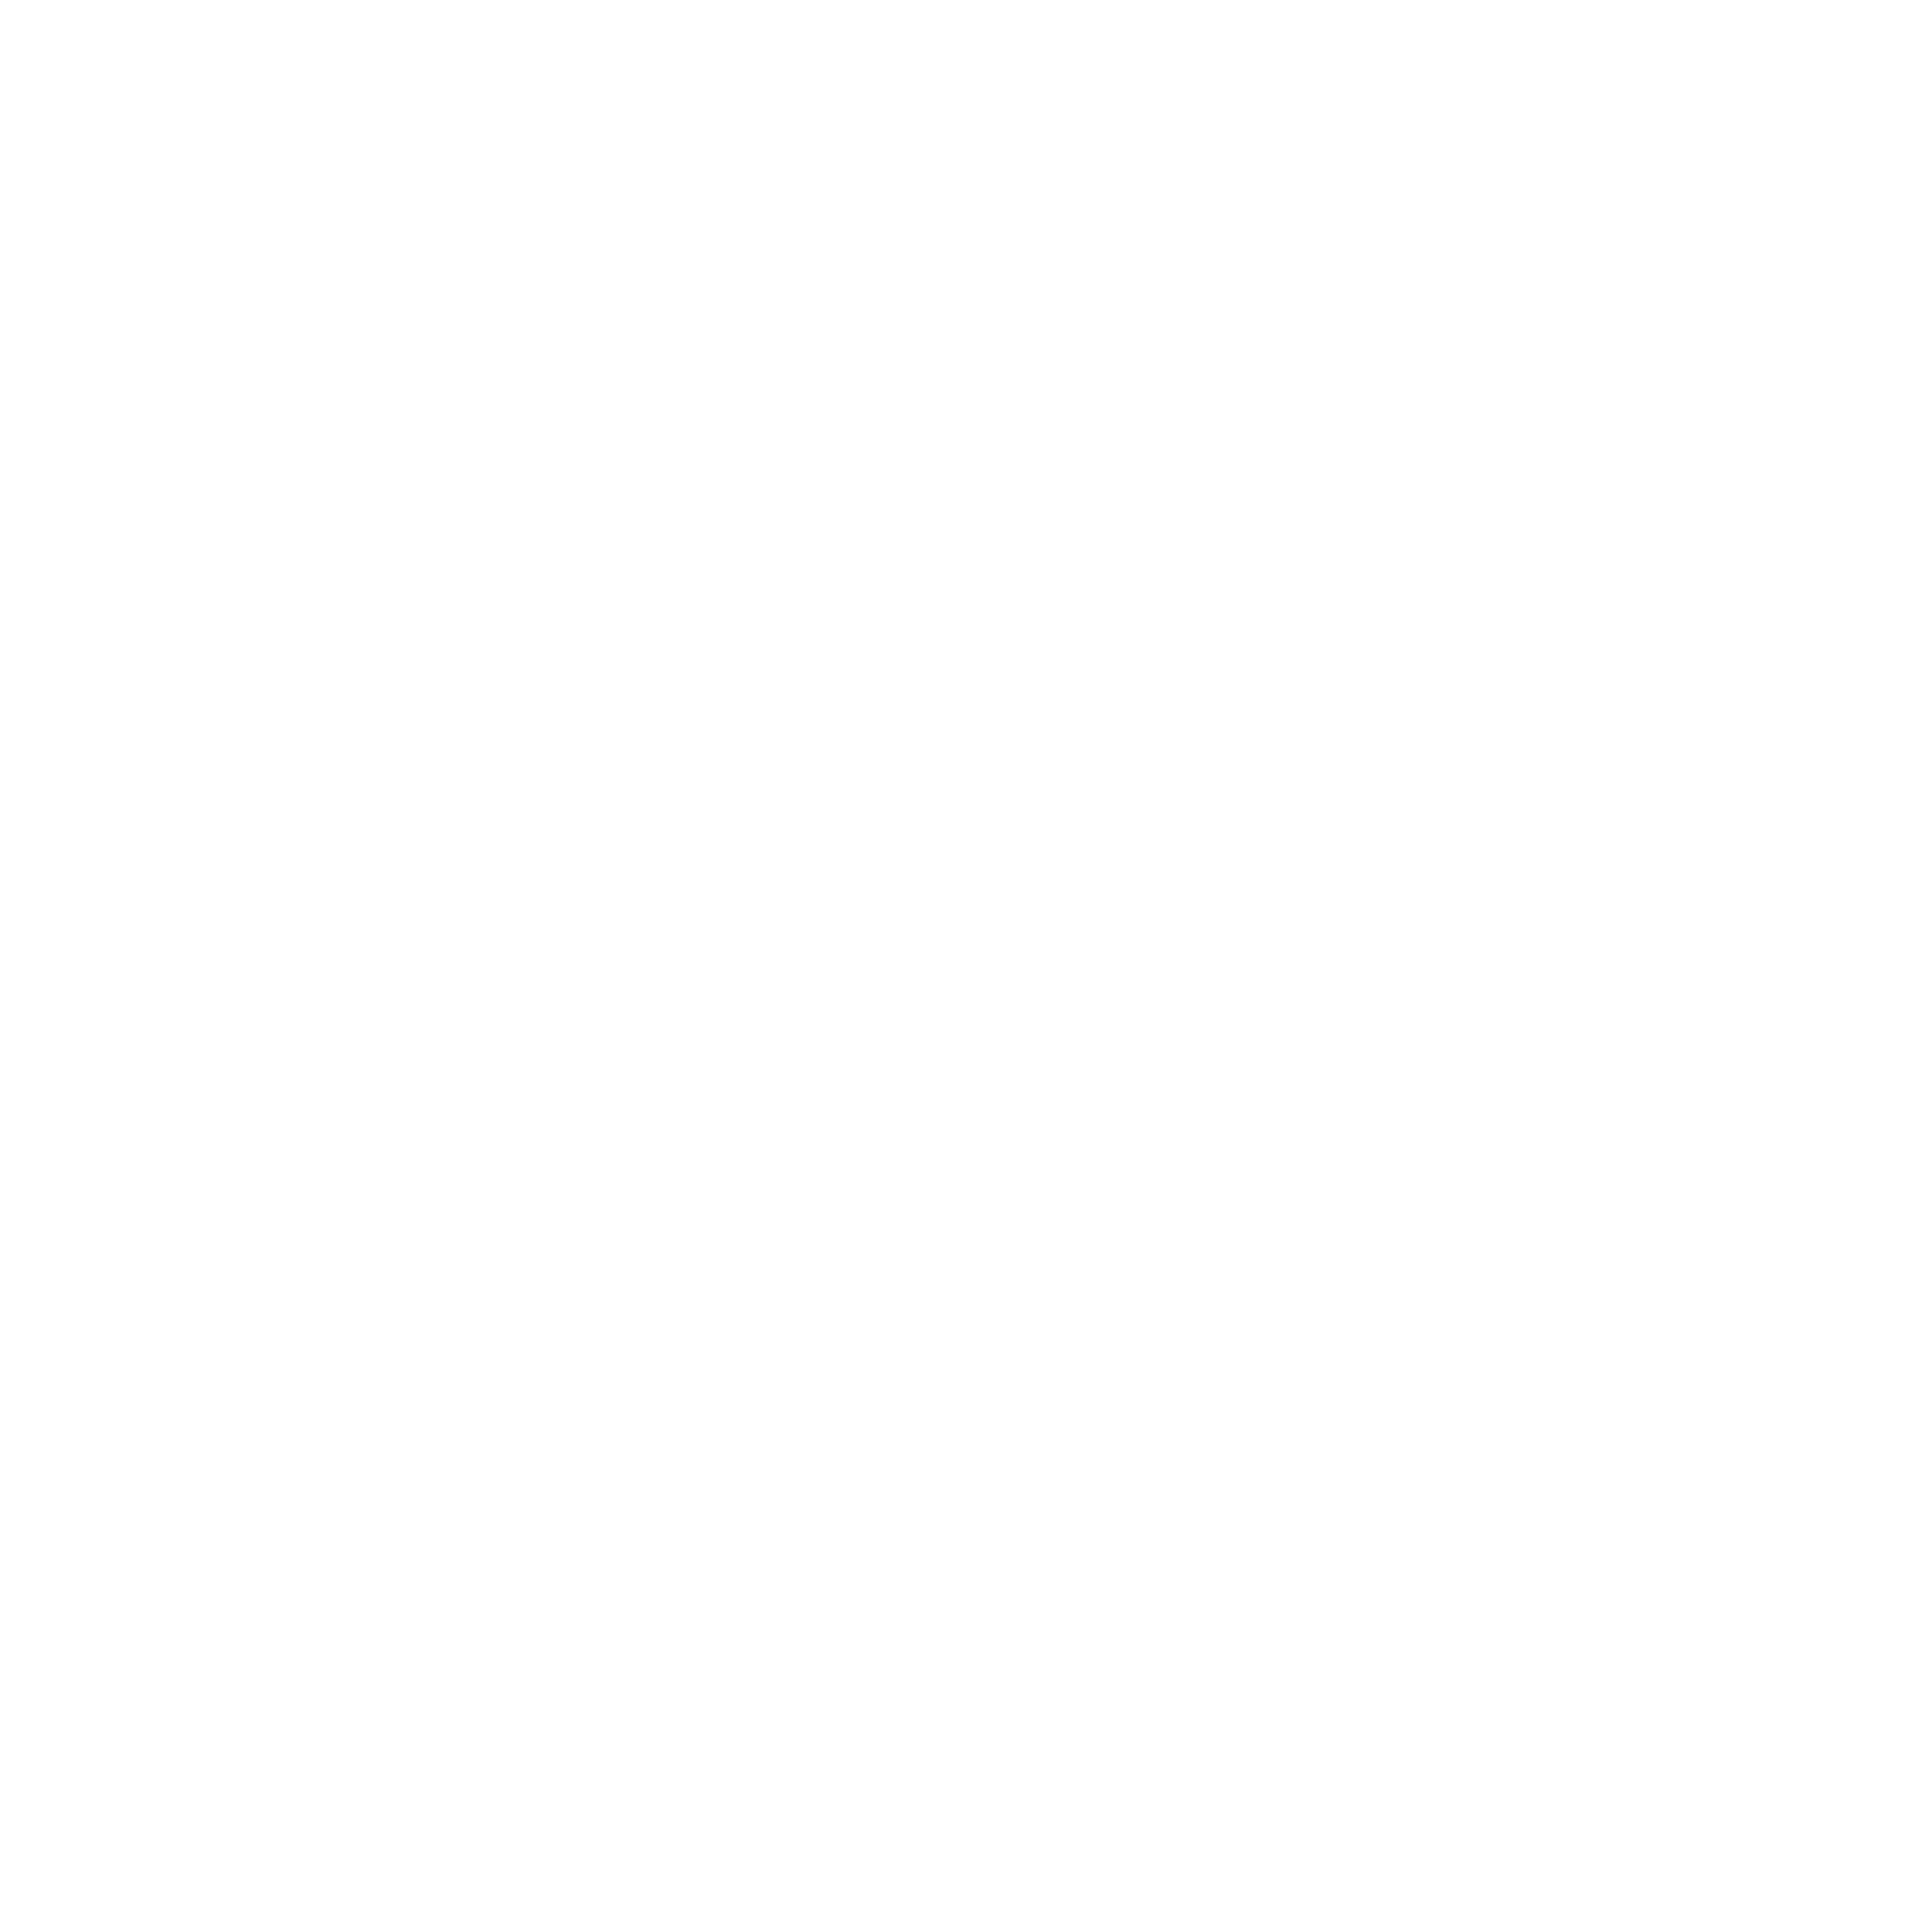 Muhanna Foundation